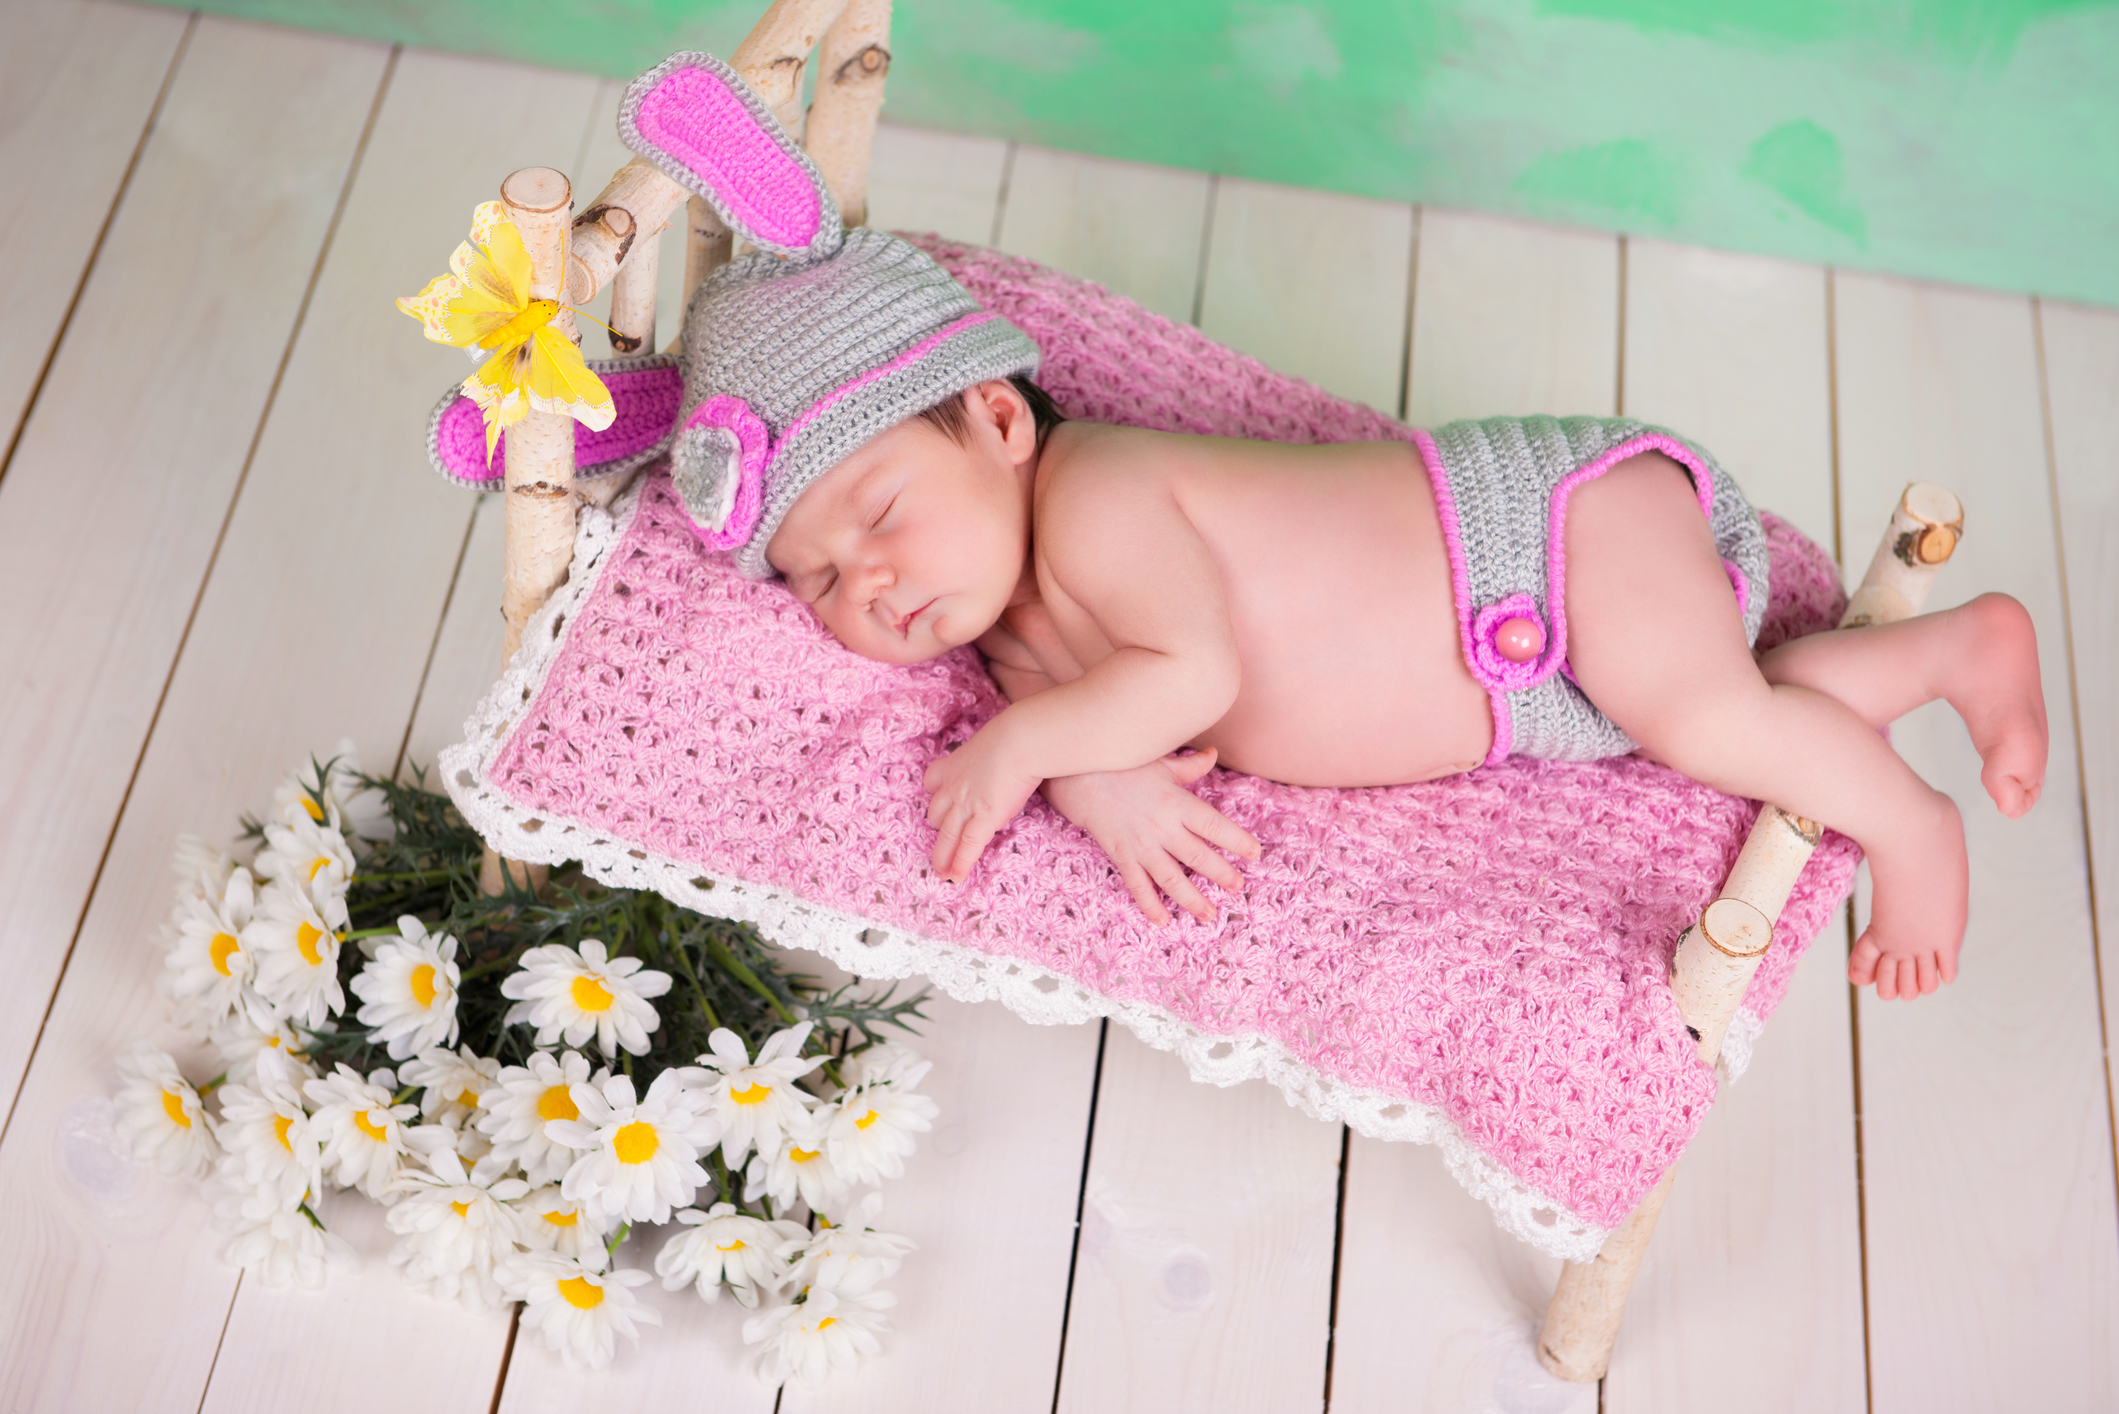 newborn baby photography props